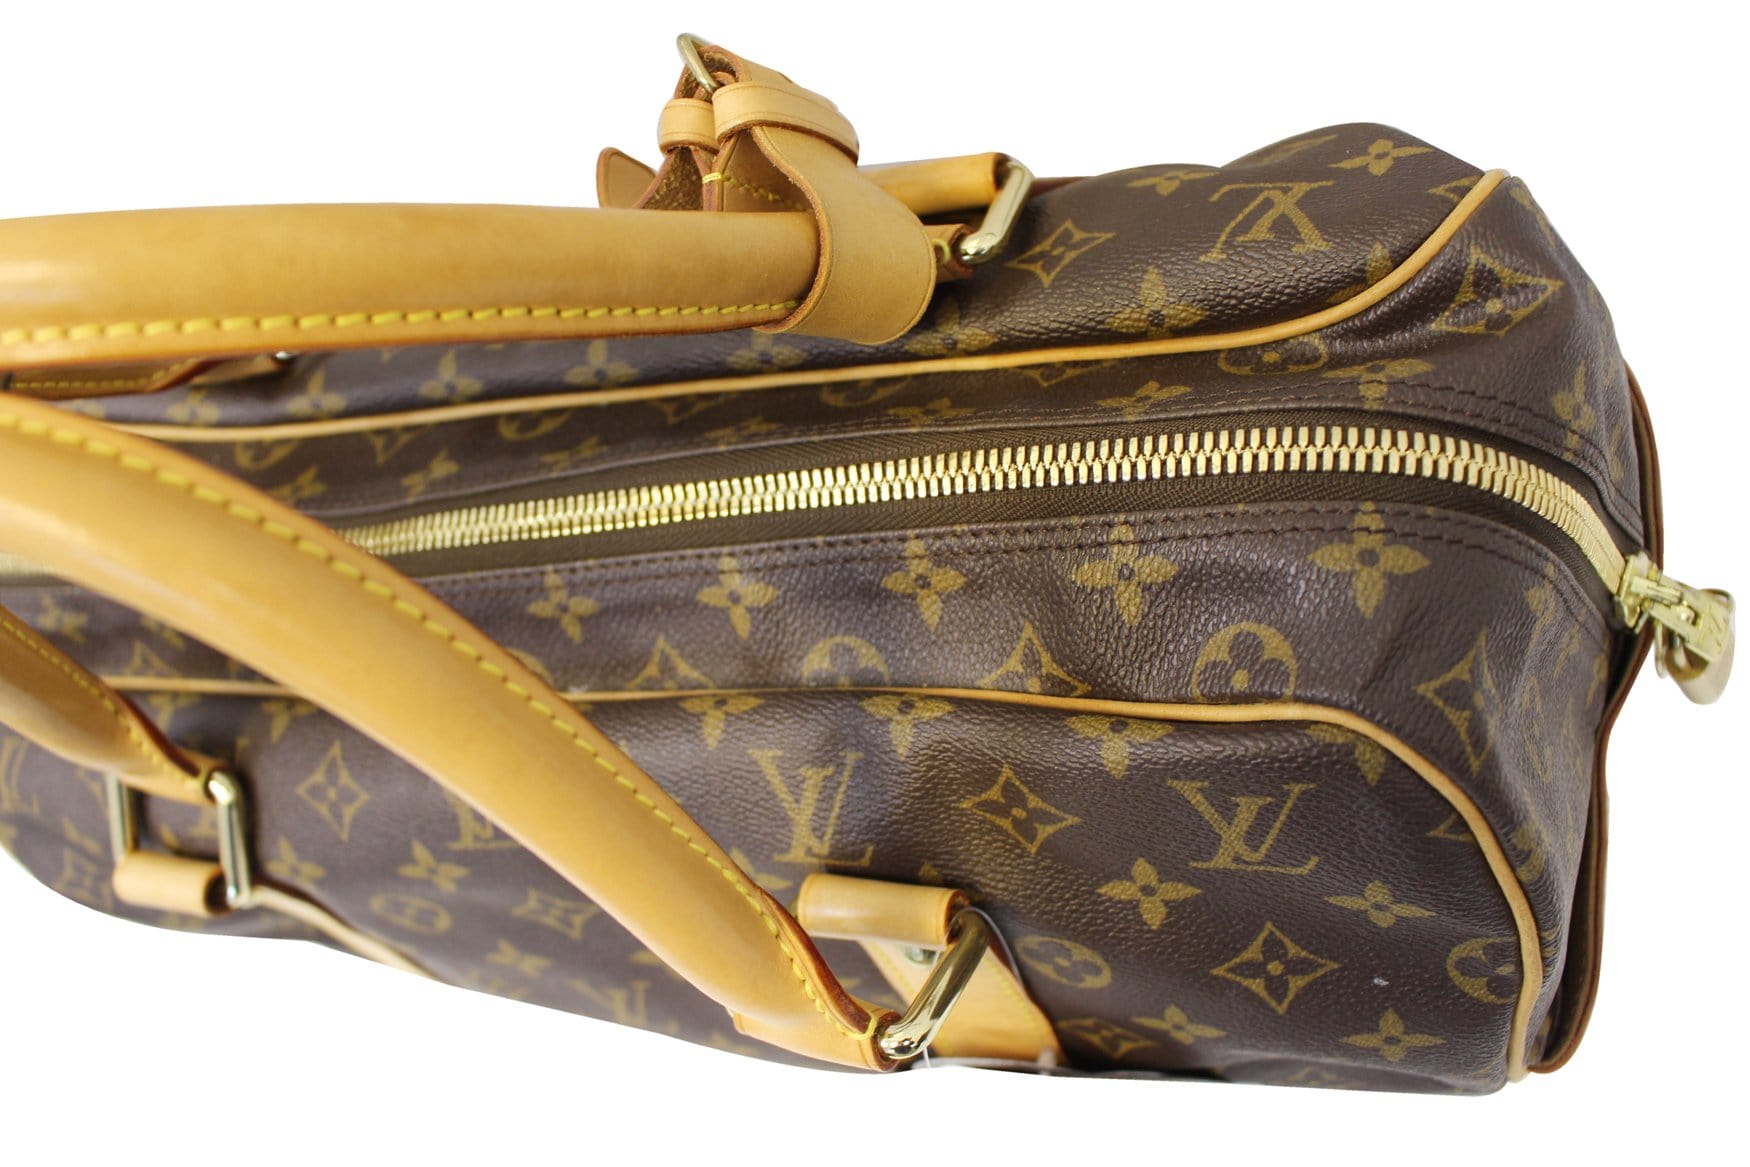 Louis Vuitton Vintage Carryall Travel Bag, $3,278